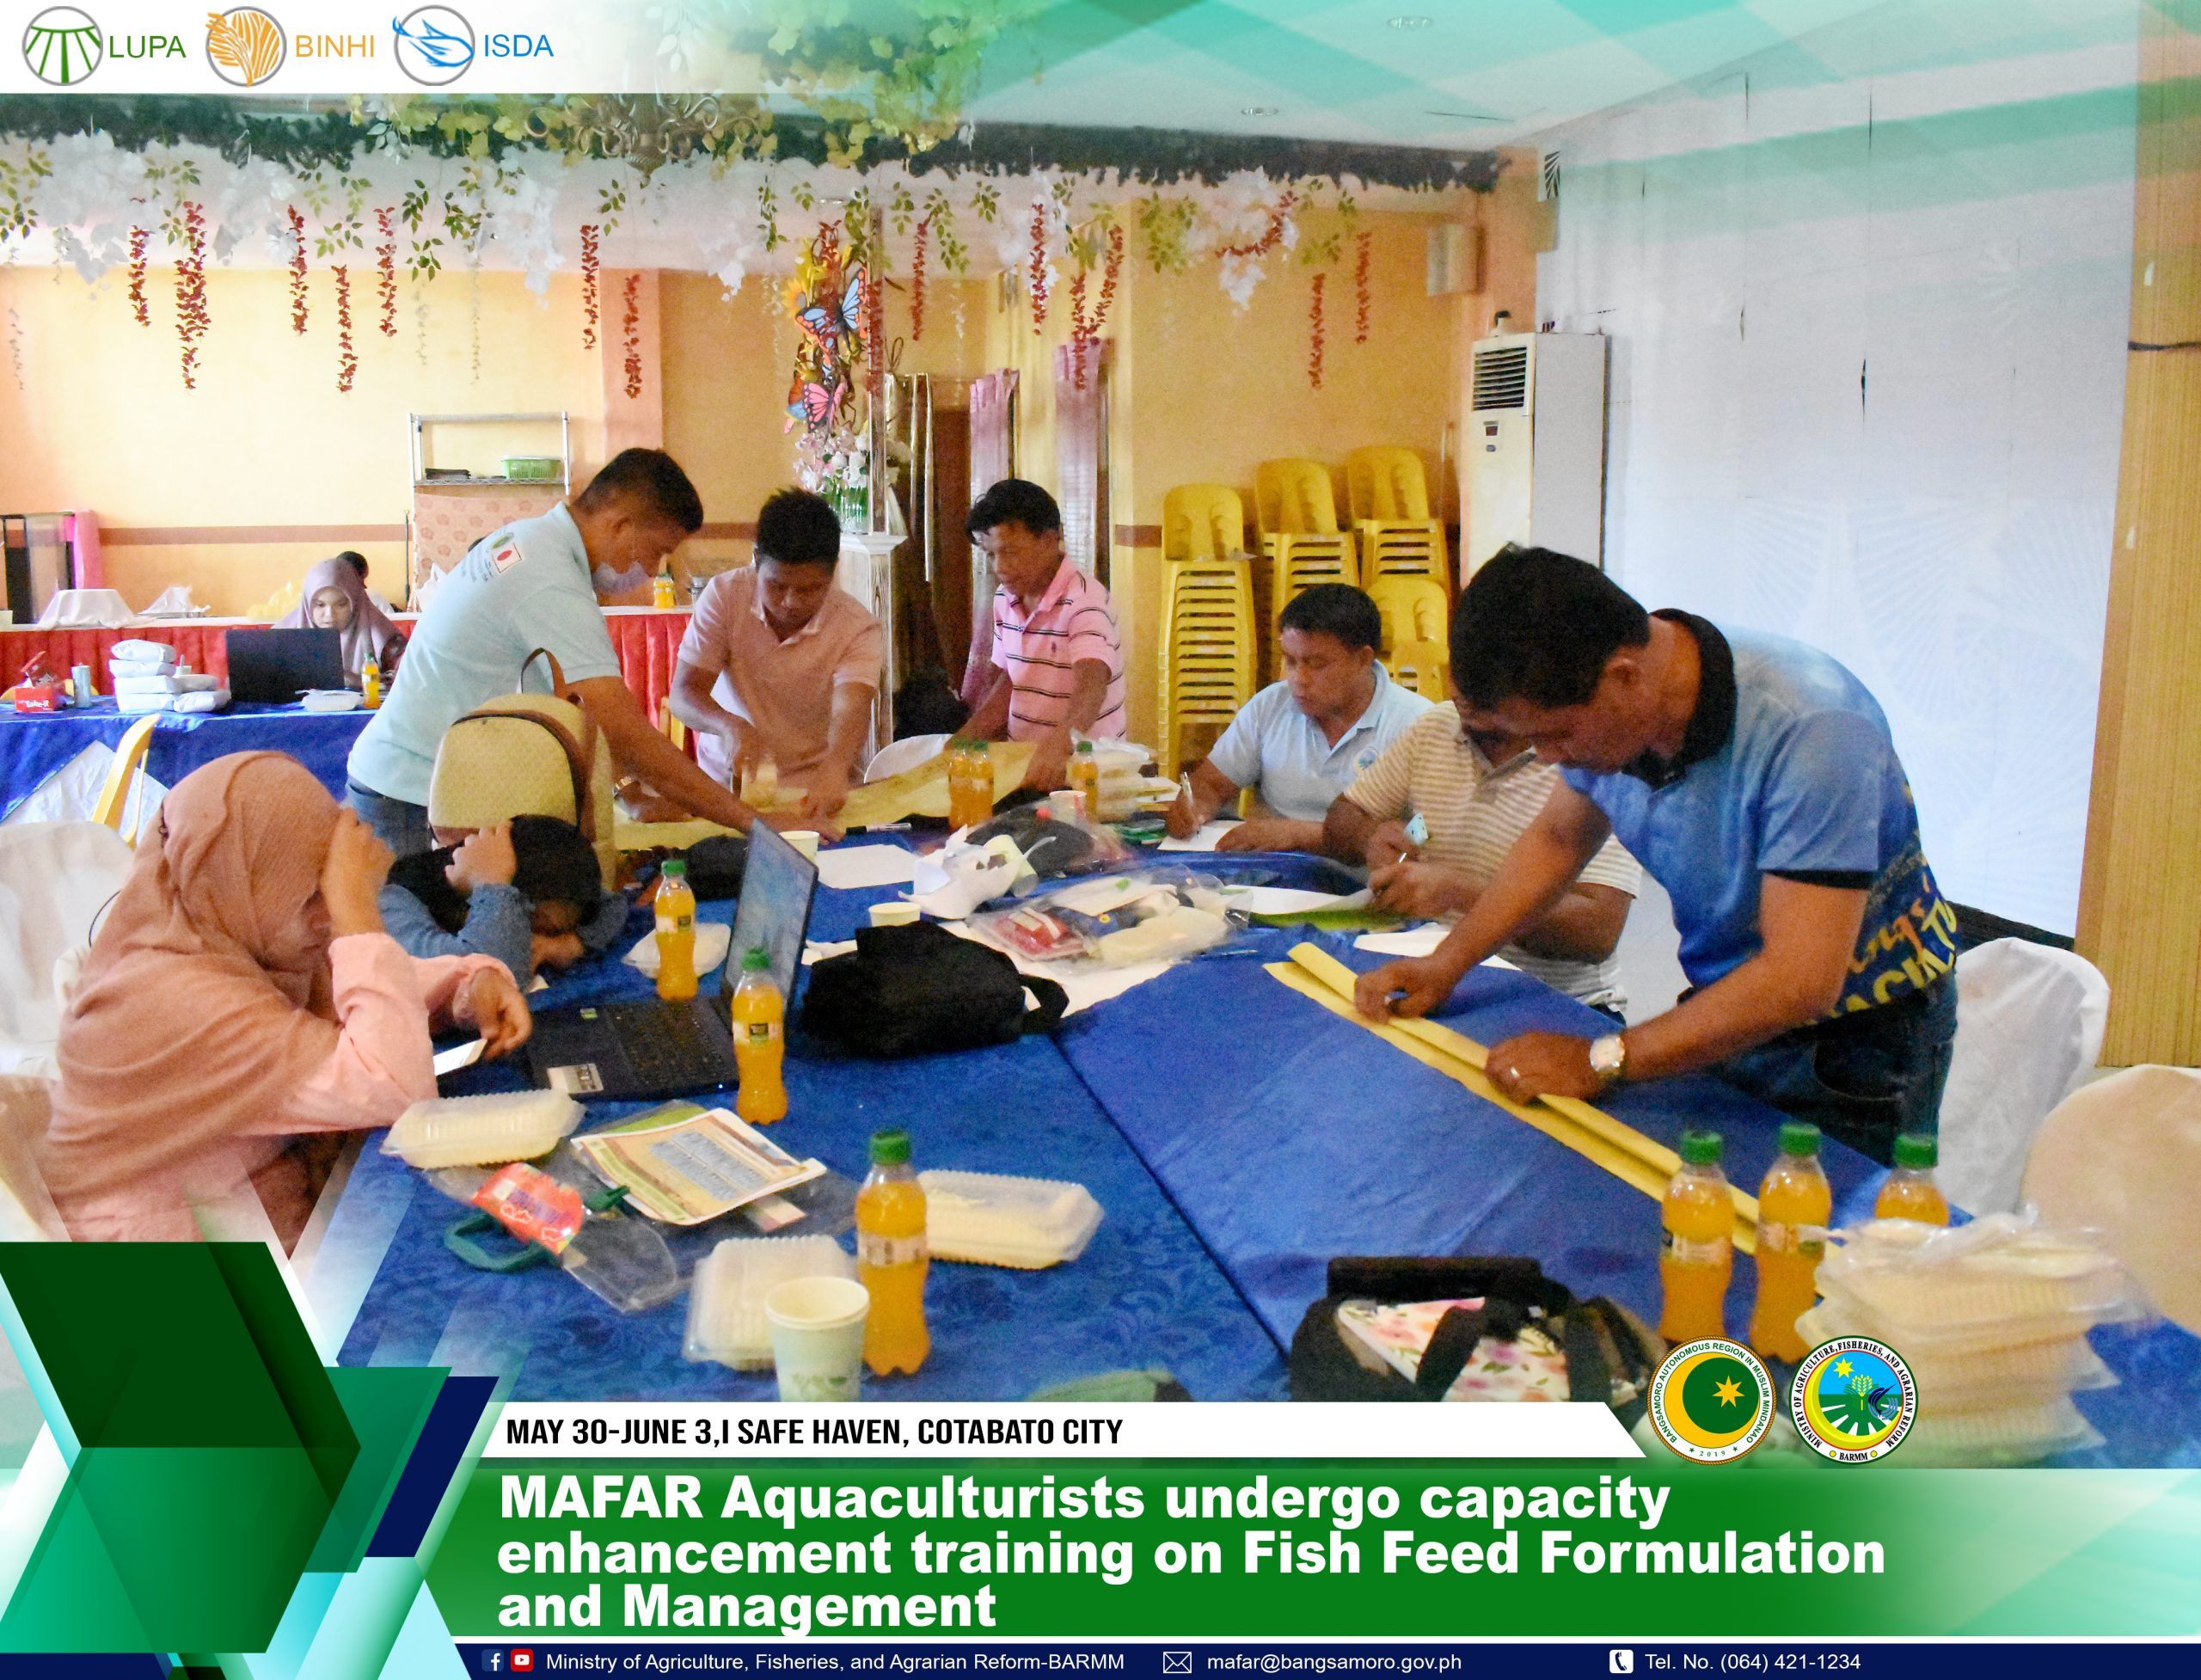 MAFAR Aquaculturist undergo capacity enhancement training on fish feed formulation, feeding management